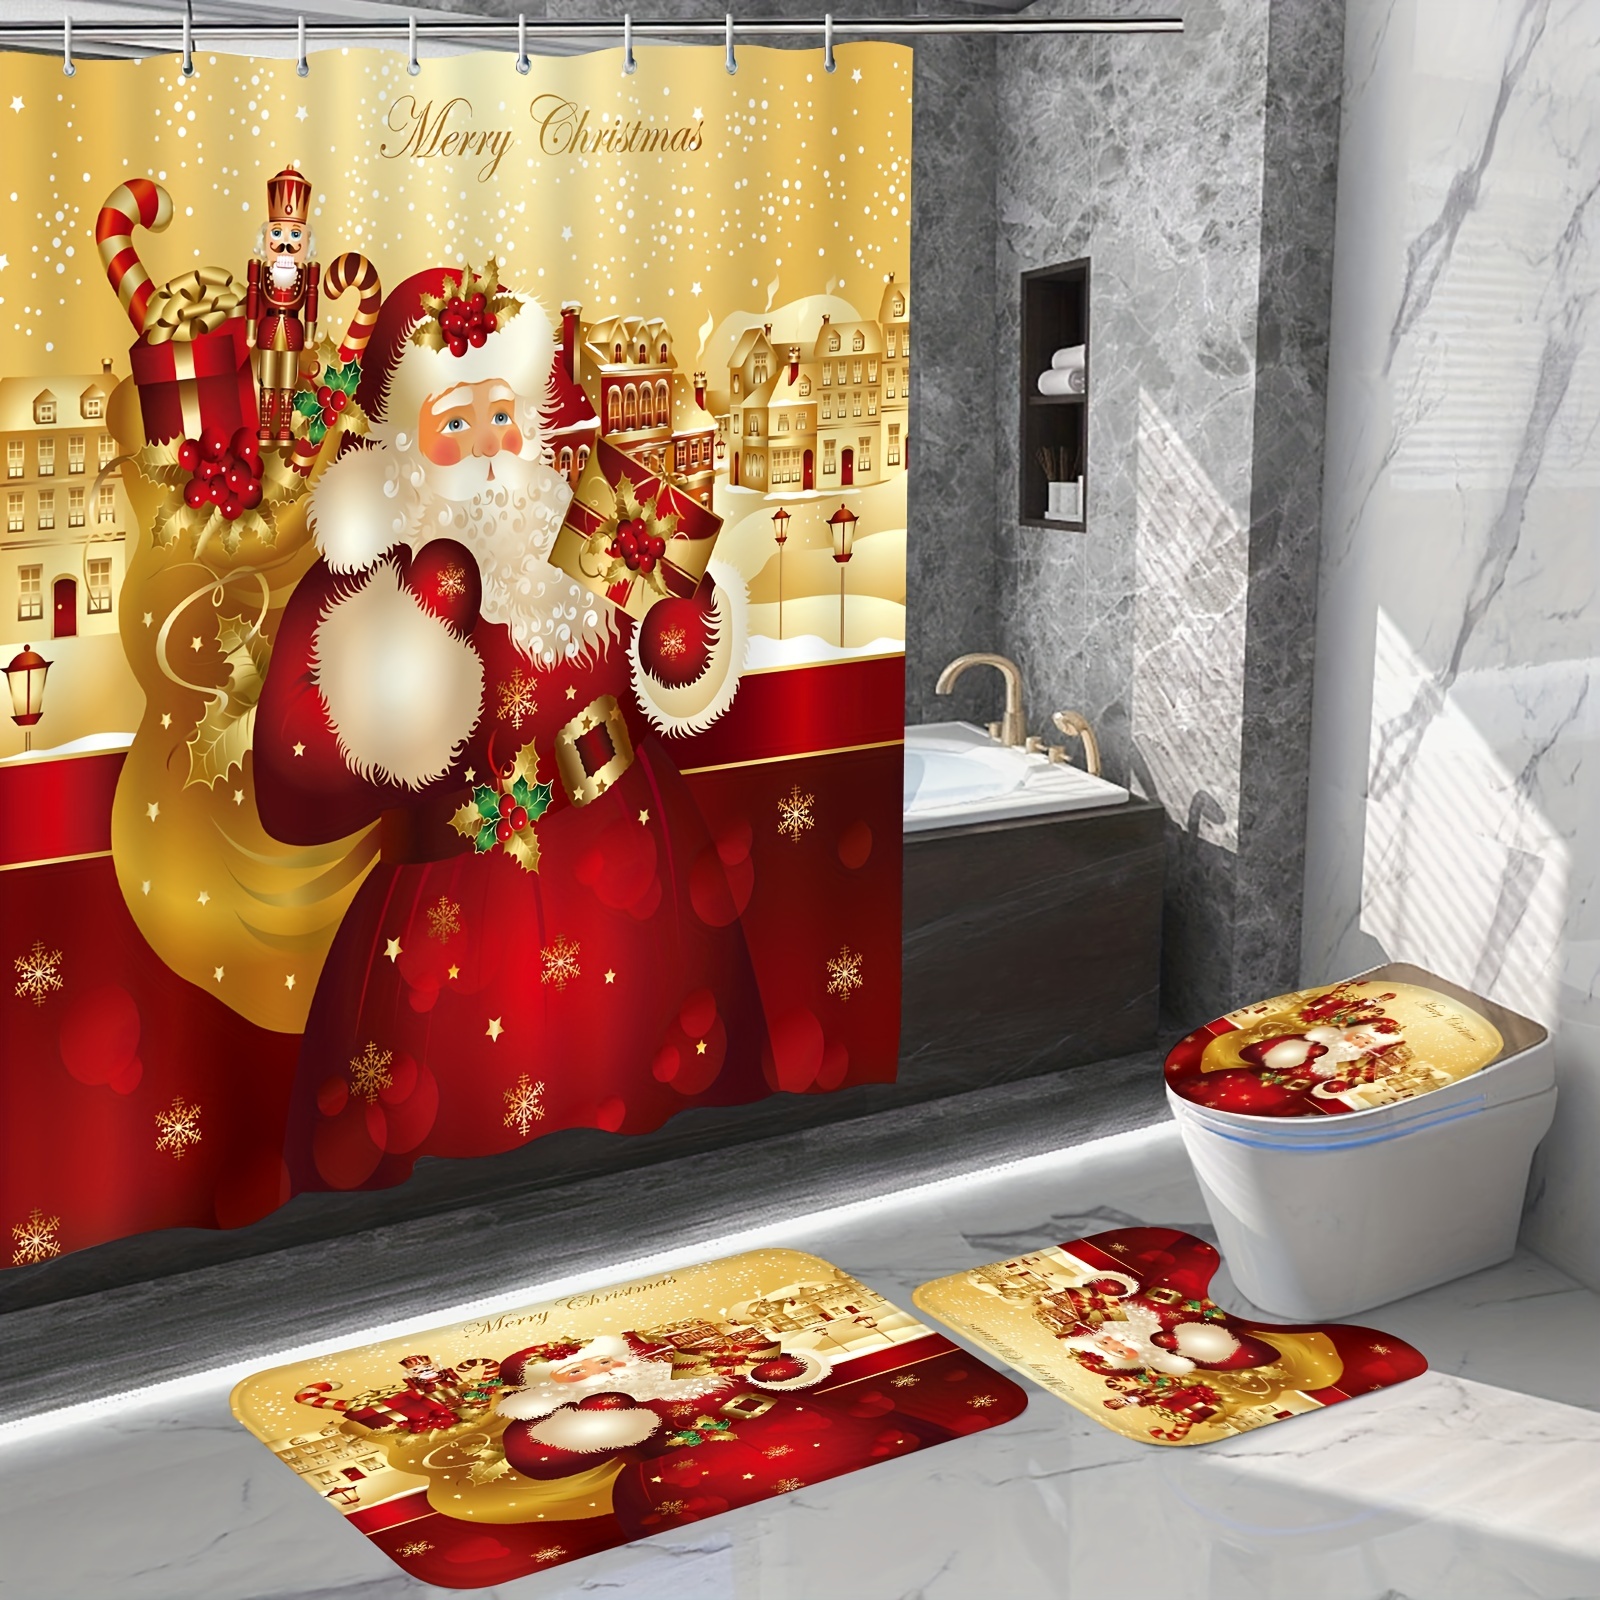  Possta Decor Shower Curtain for Bathroom Christmas